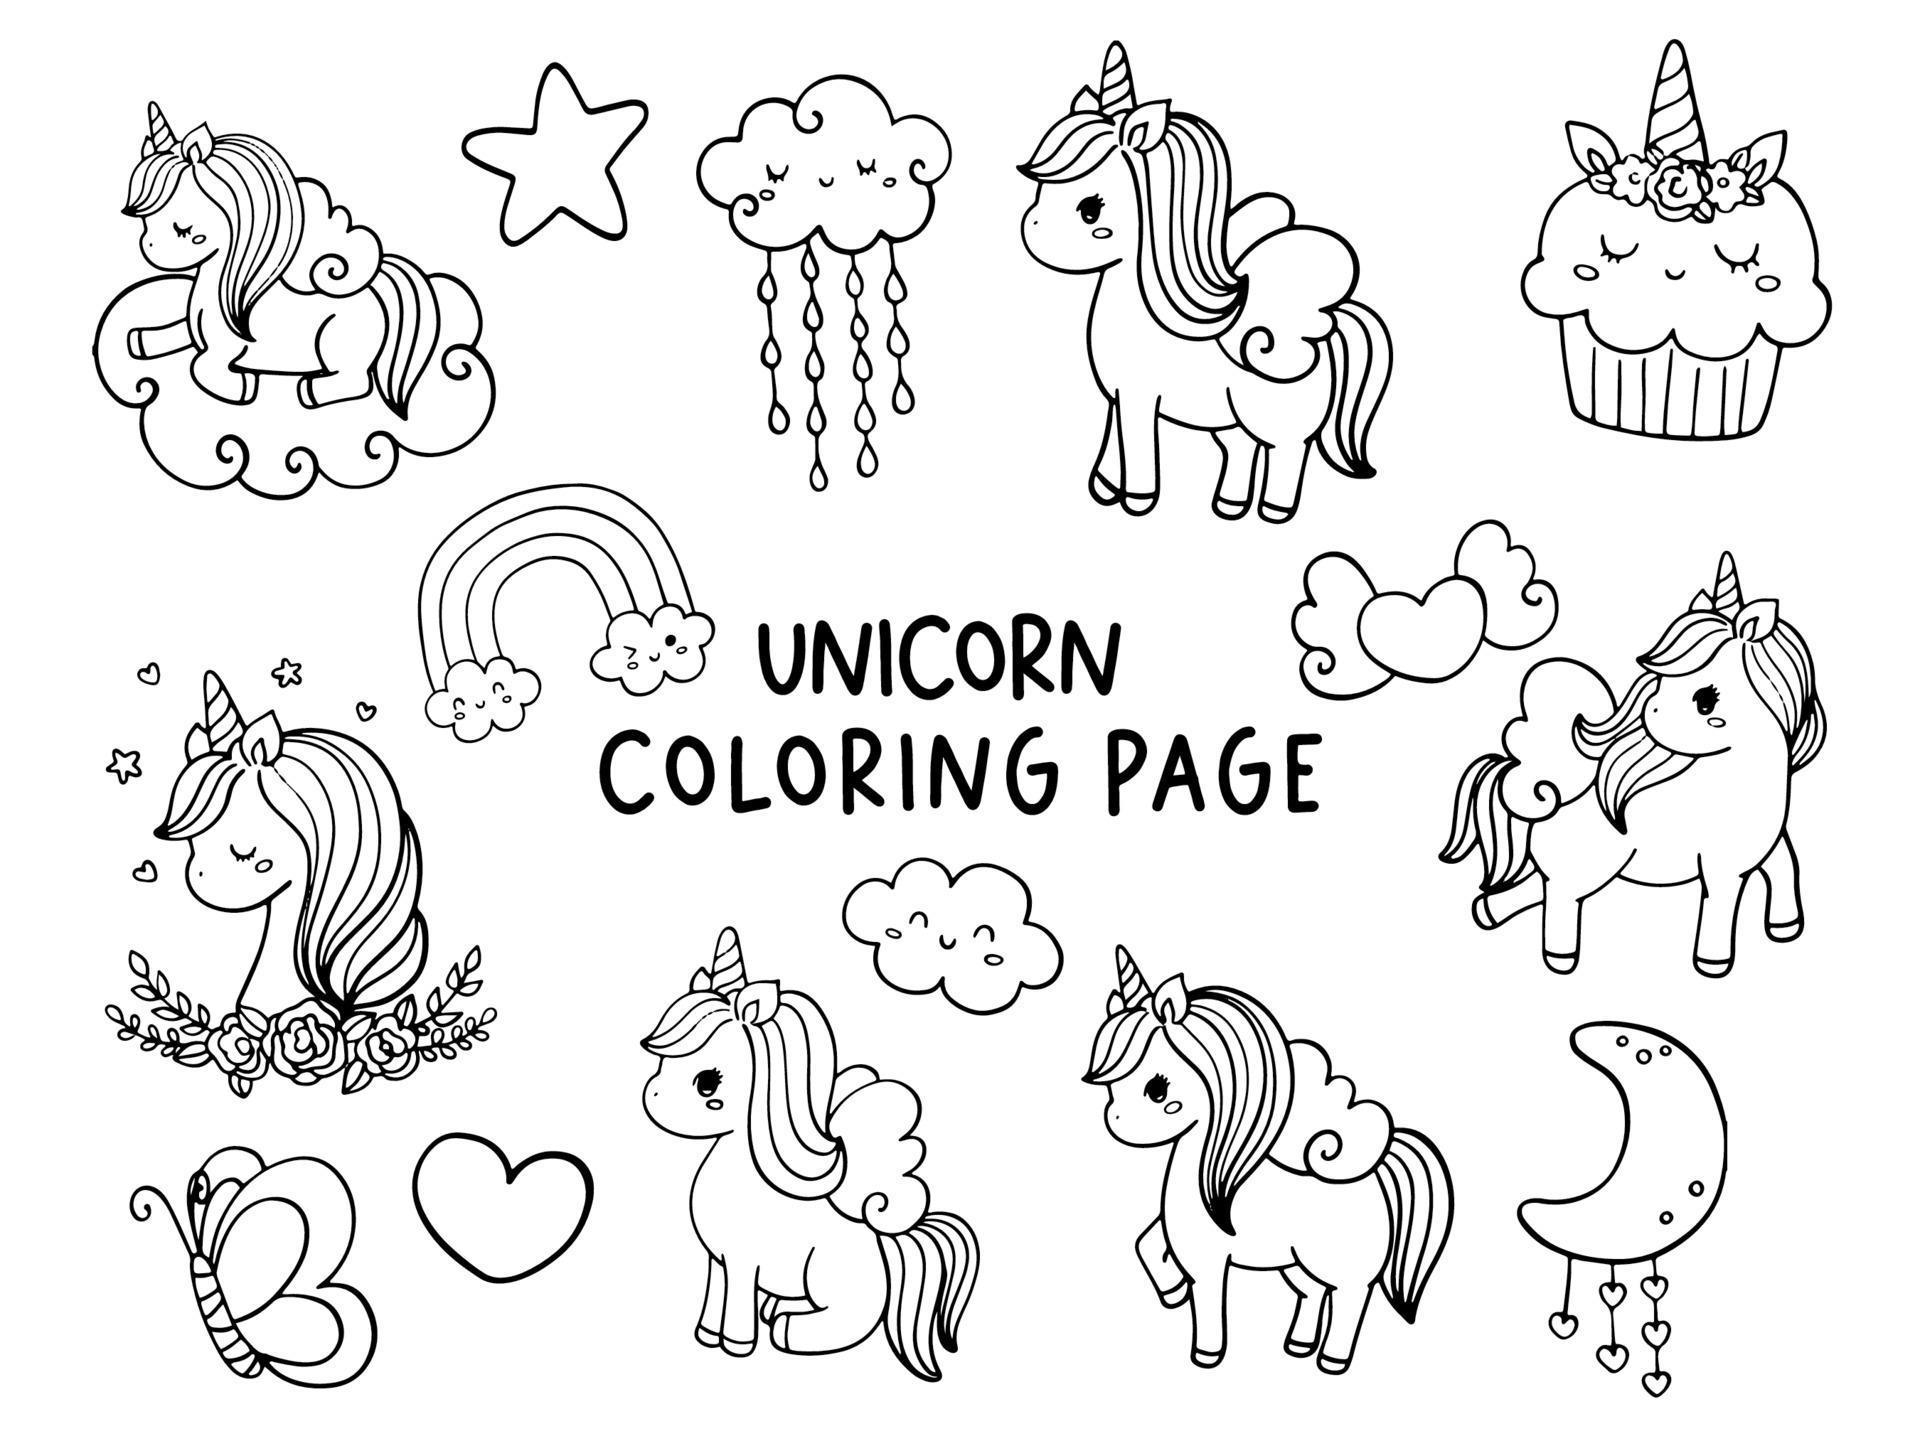 Unicorn coloring page, Unicorn doodle vector illustration 20 ...